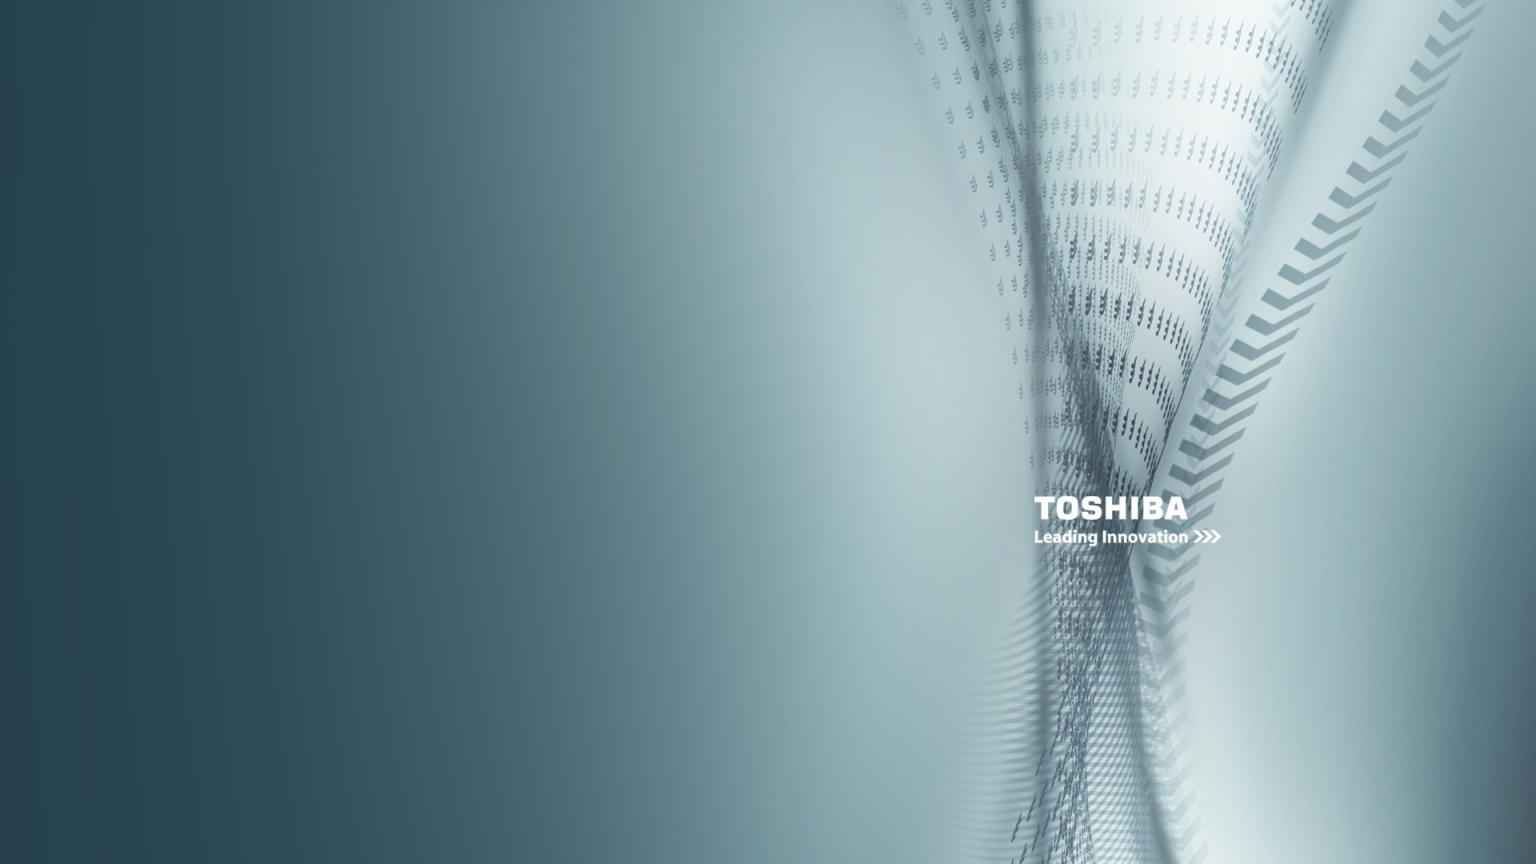 Toshiba Innovation for 1536 x 864 HDTV resolution